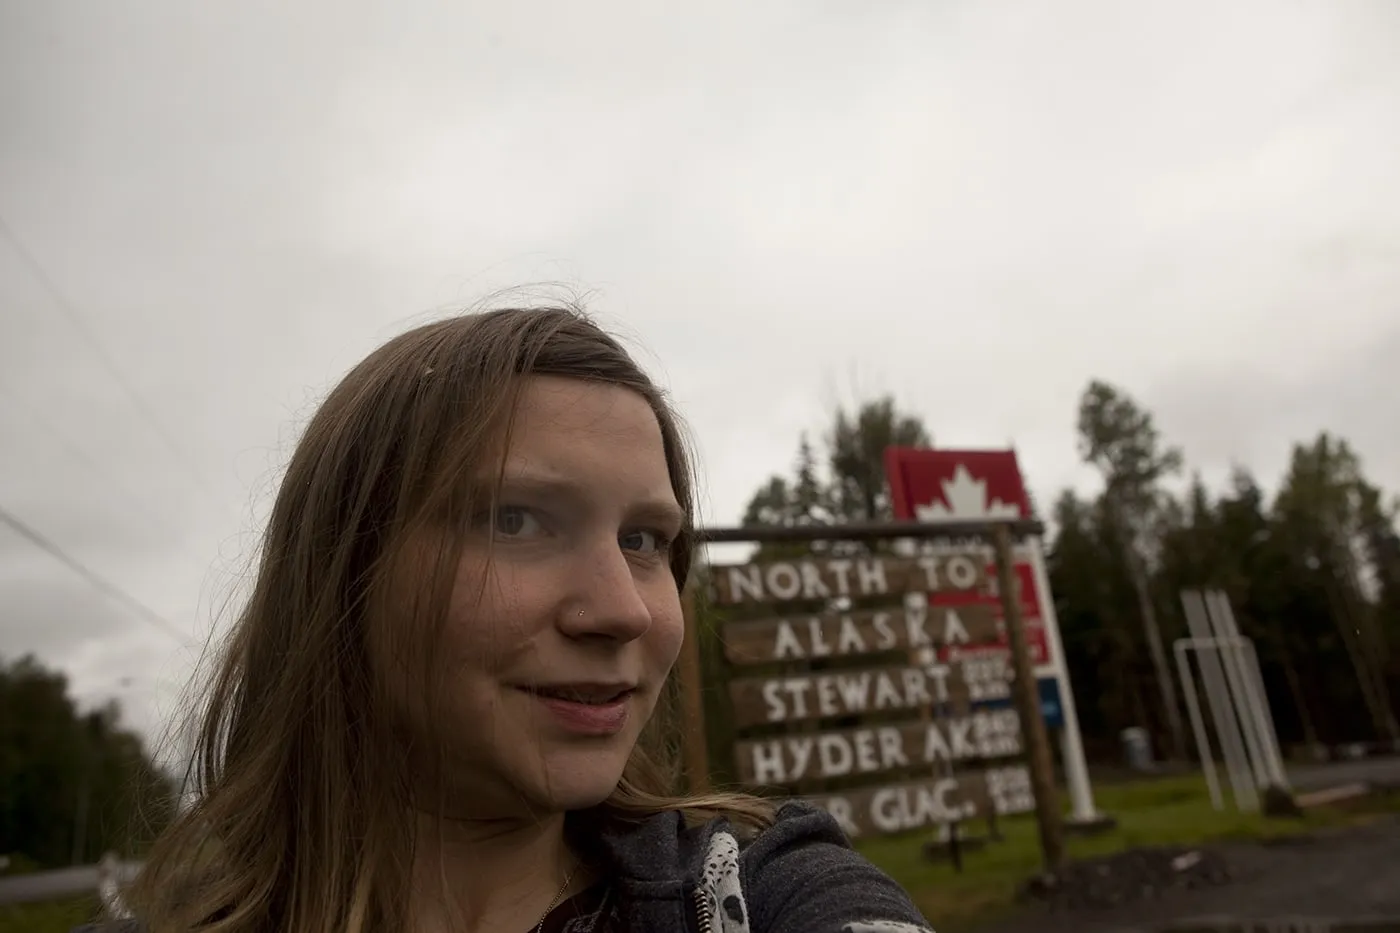 Val with the North to Alaska, Stewart, Hyder, Bear Glacier sign in Kitwanga,British Columbia, Canada.